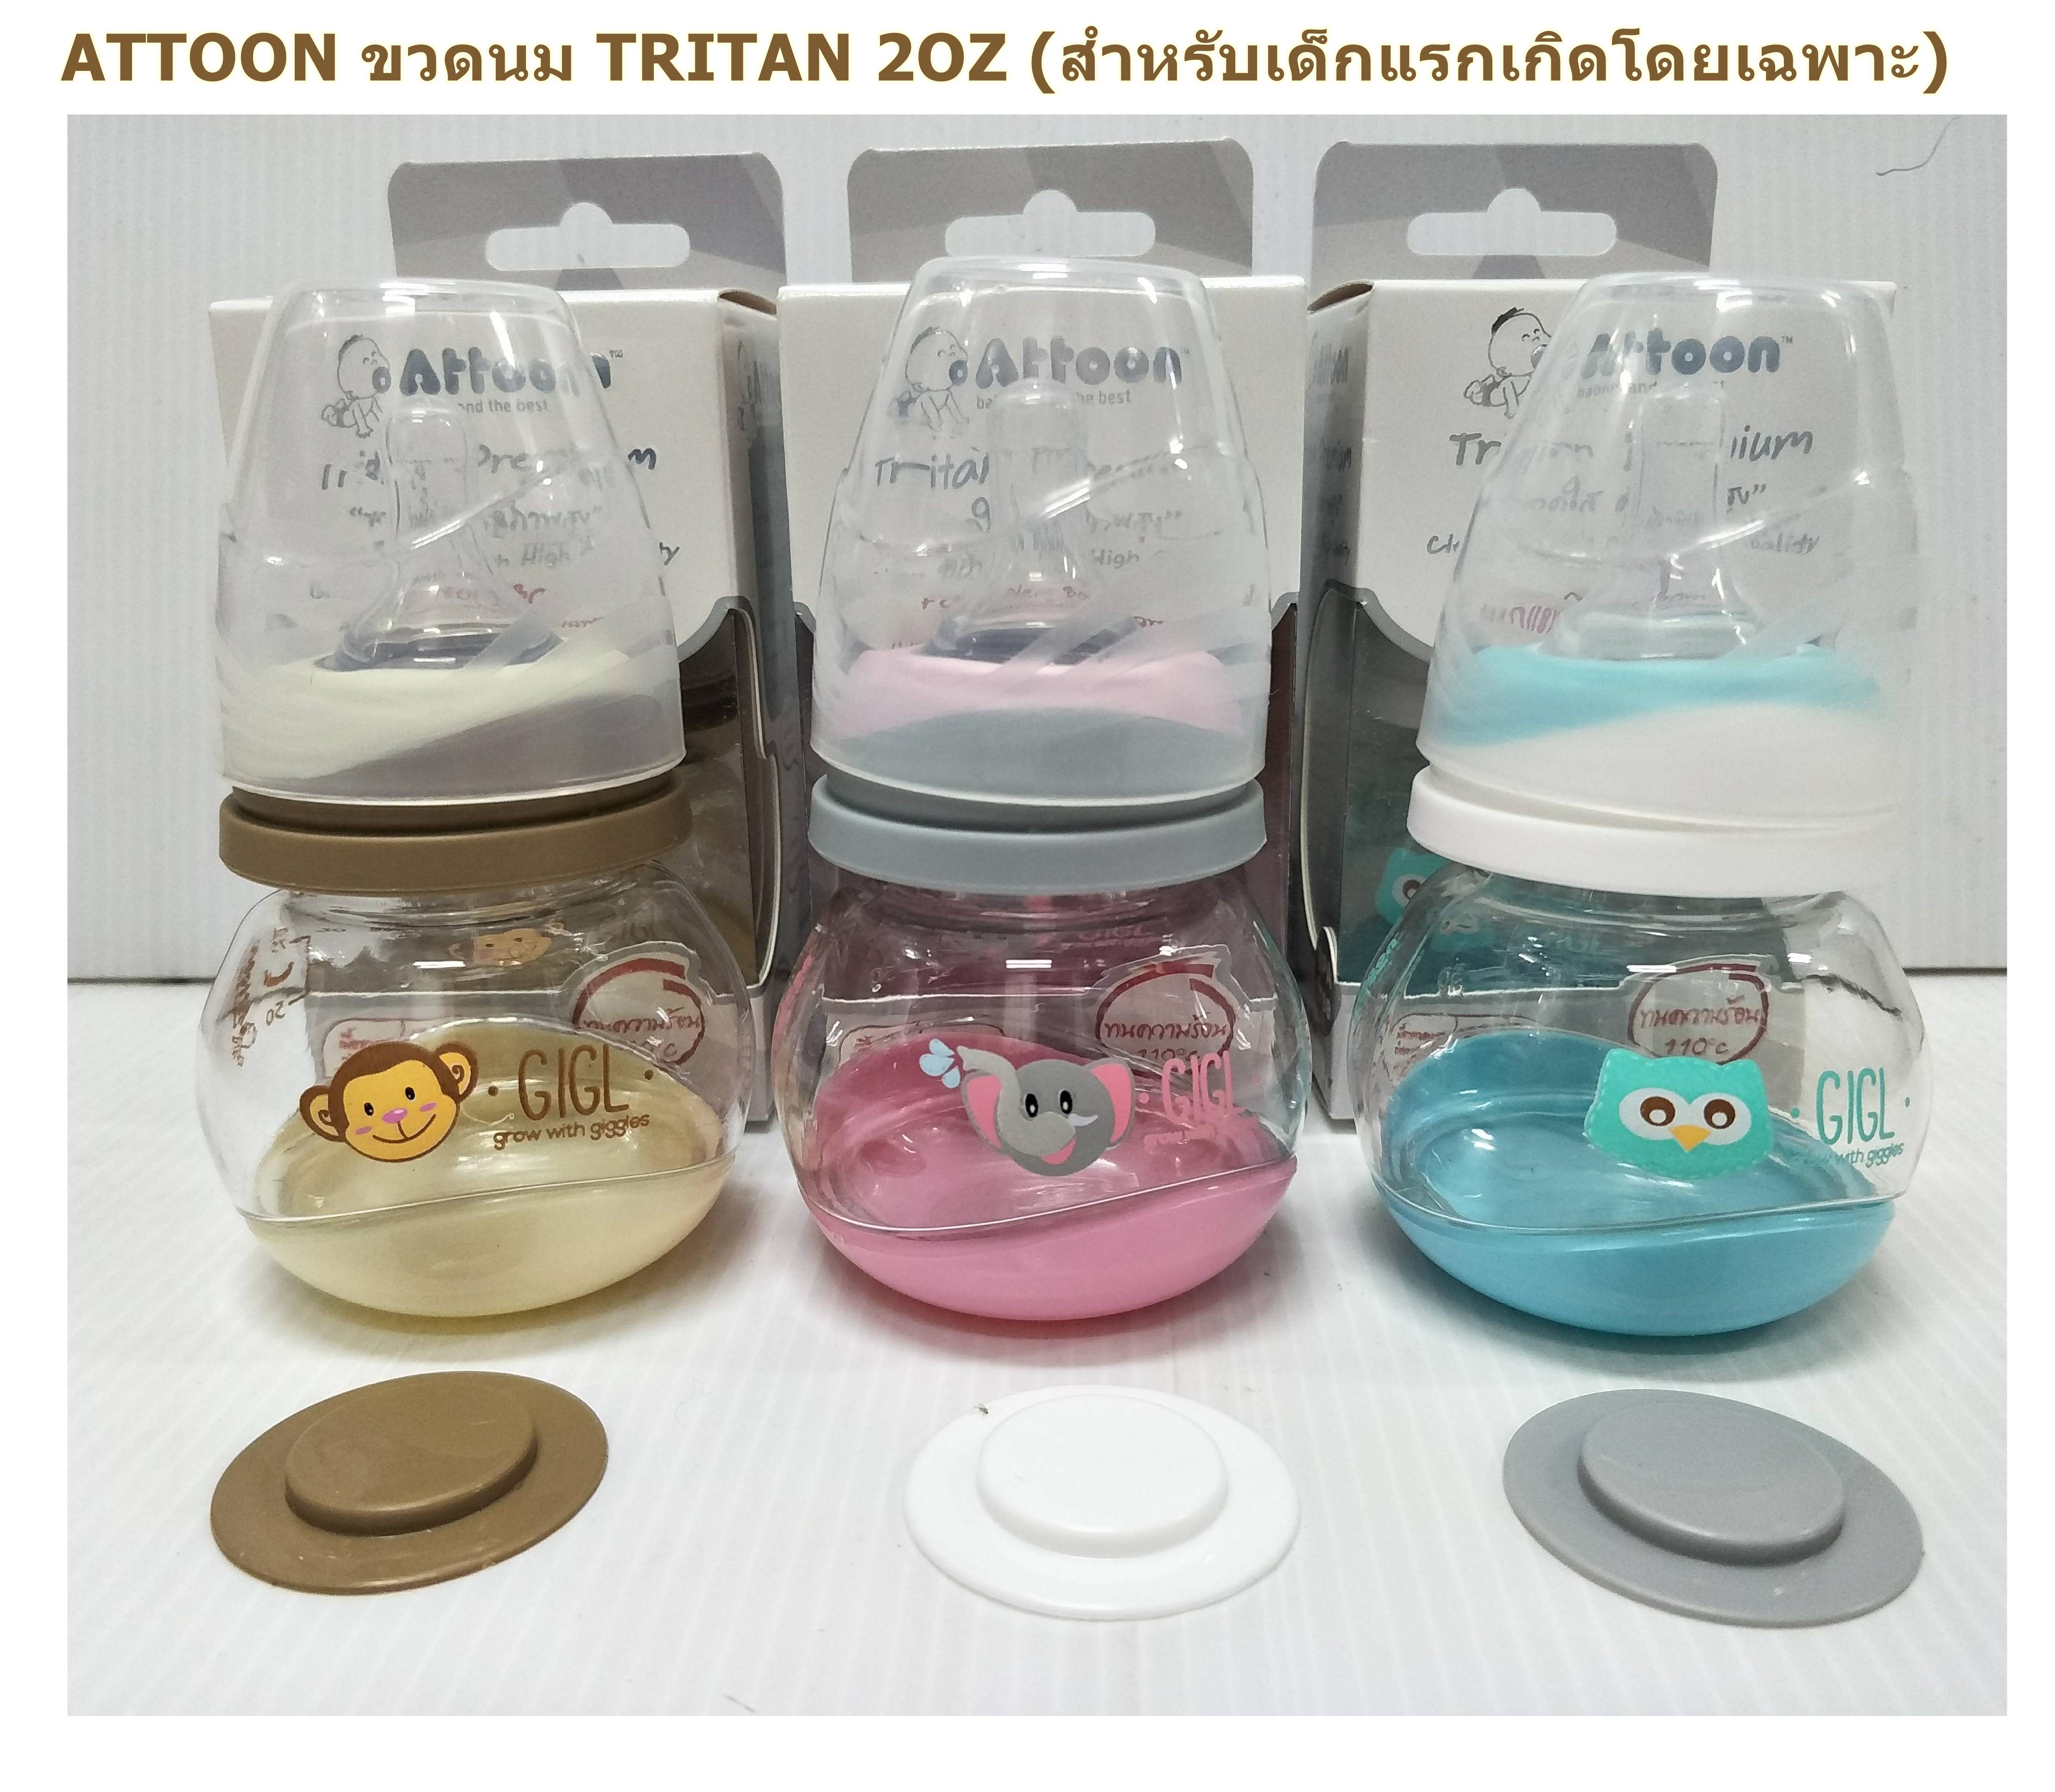 ATTOON ขวดนม TRITAN 2 OZ.  (แถมจุกนมนิวบอร์นแรกเกิด)  เนื้อขวดนมผลิตจากวัสดุคุณภาพสูง TRITAN